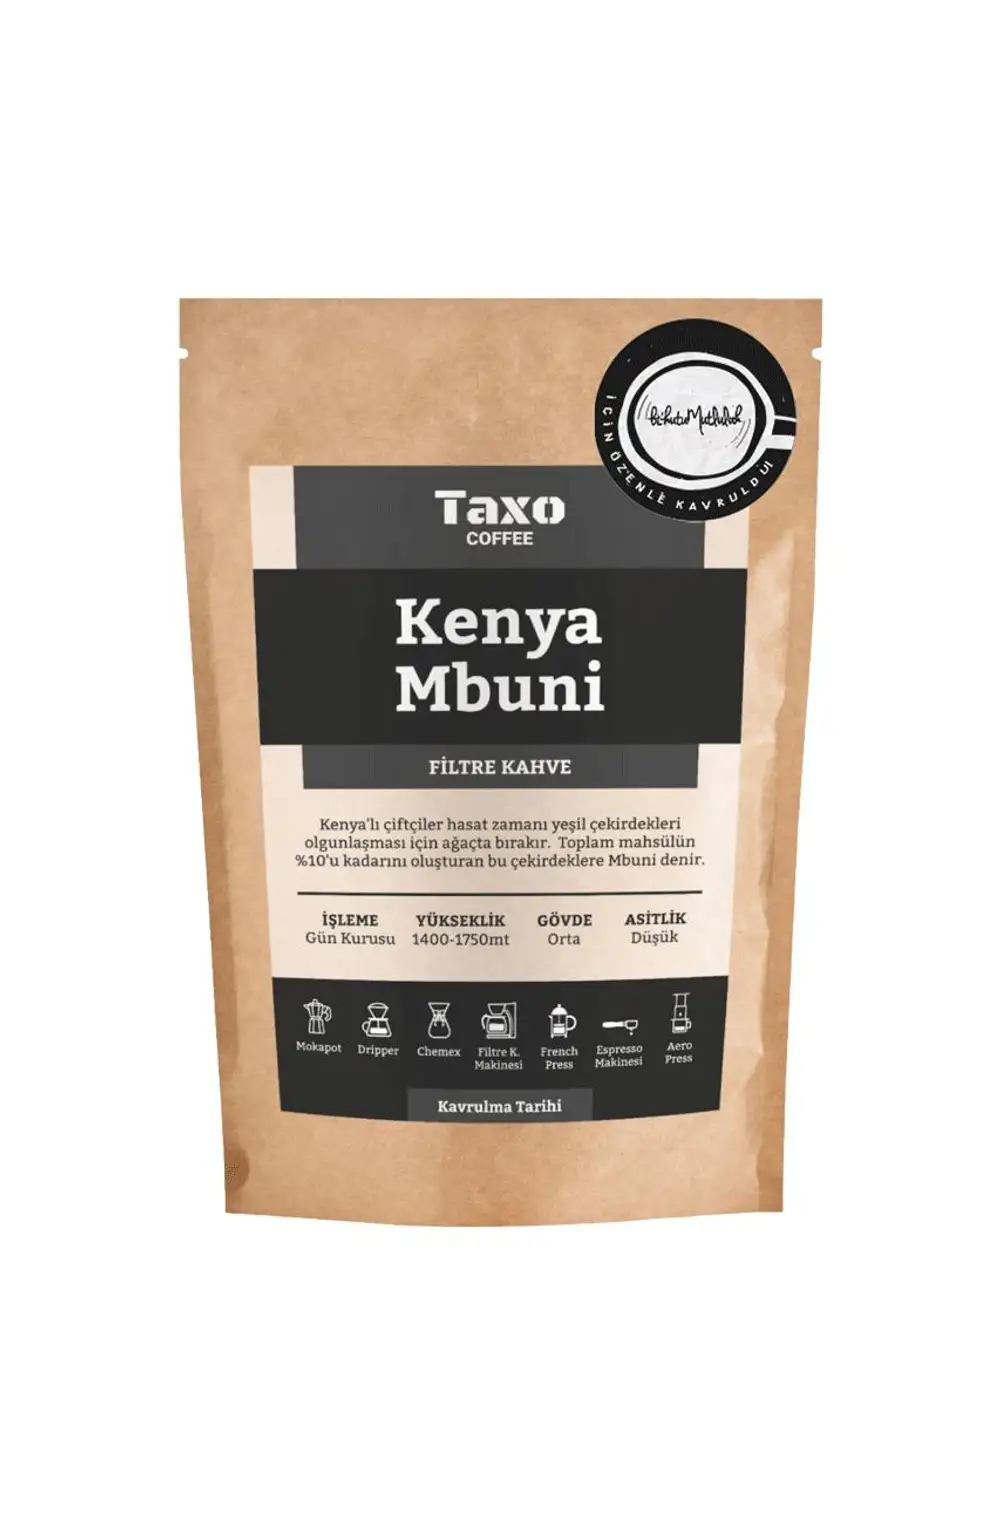 Filtre Kahve - Kenya Mbuni Taxo Coffee 50 gr.